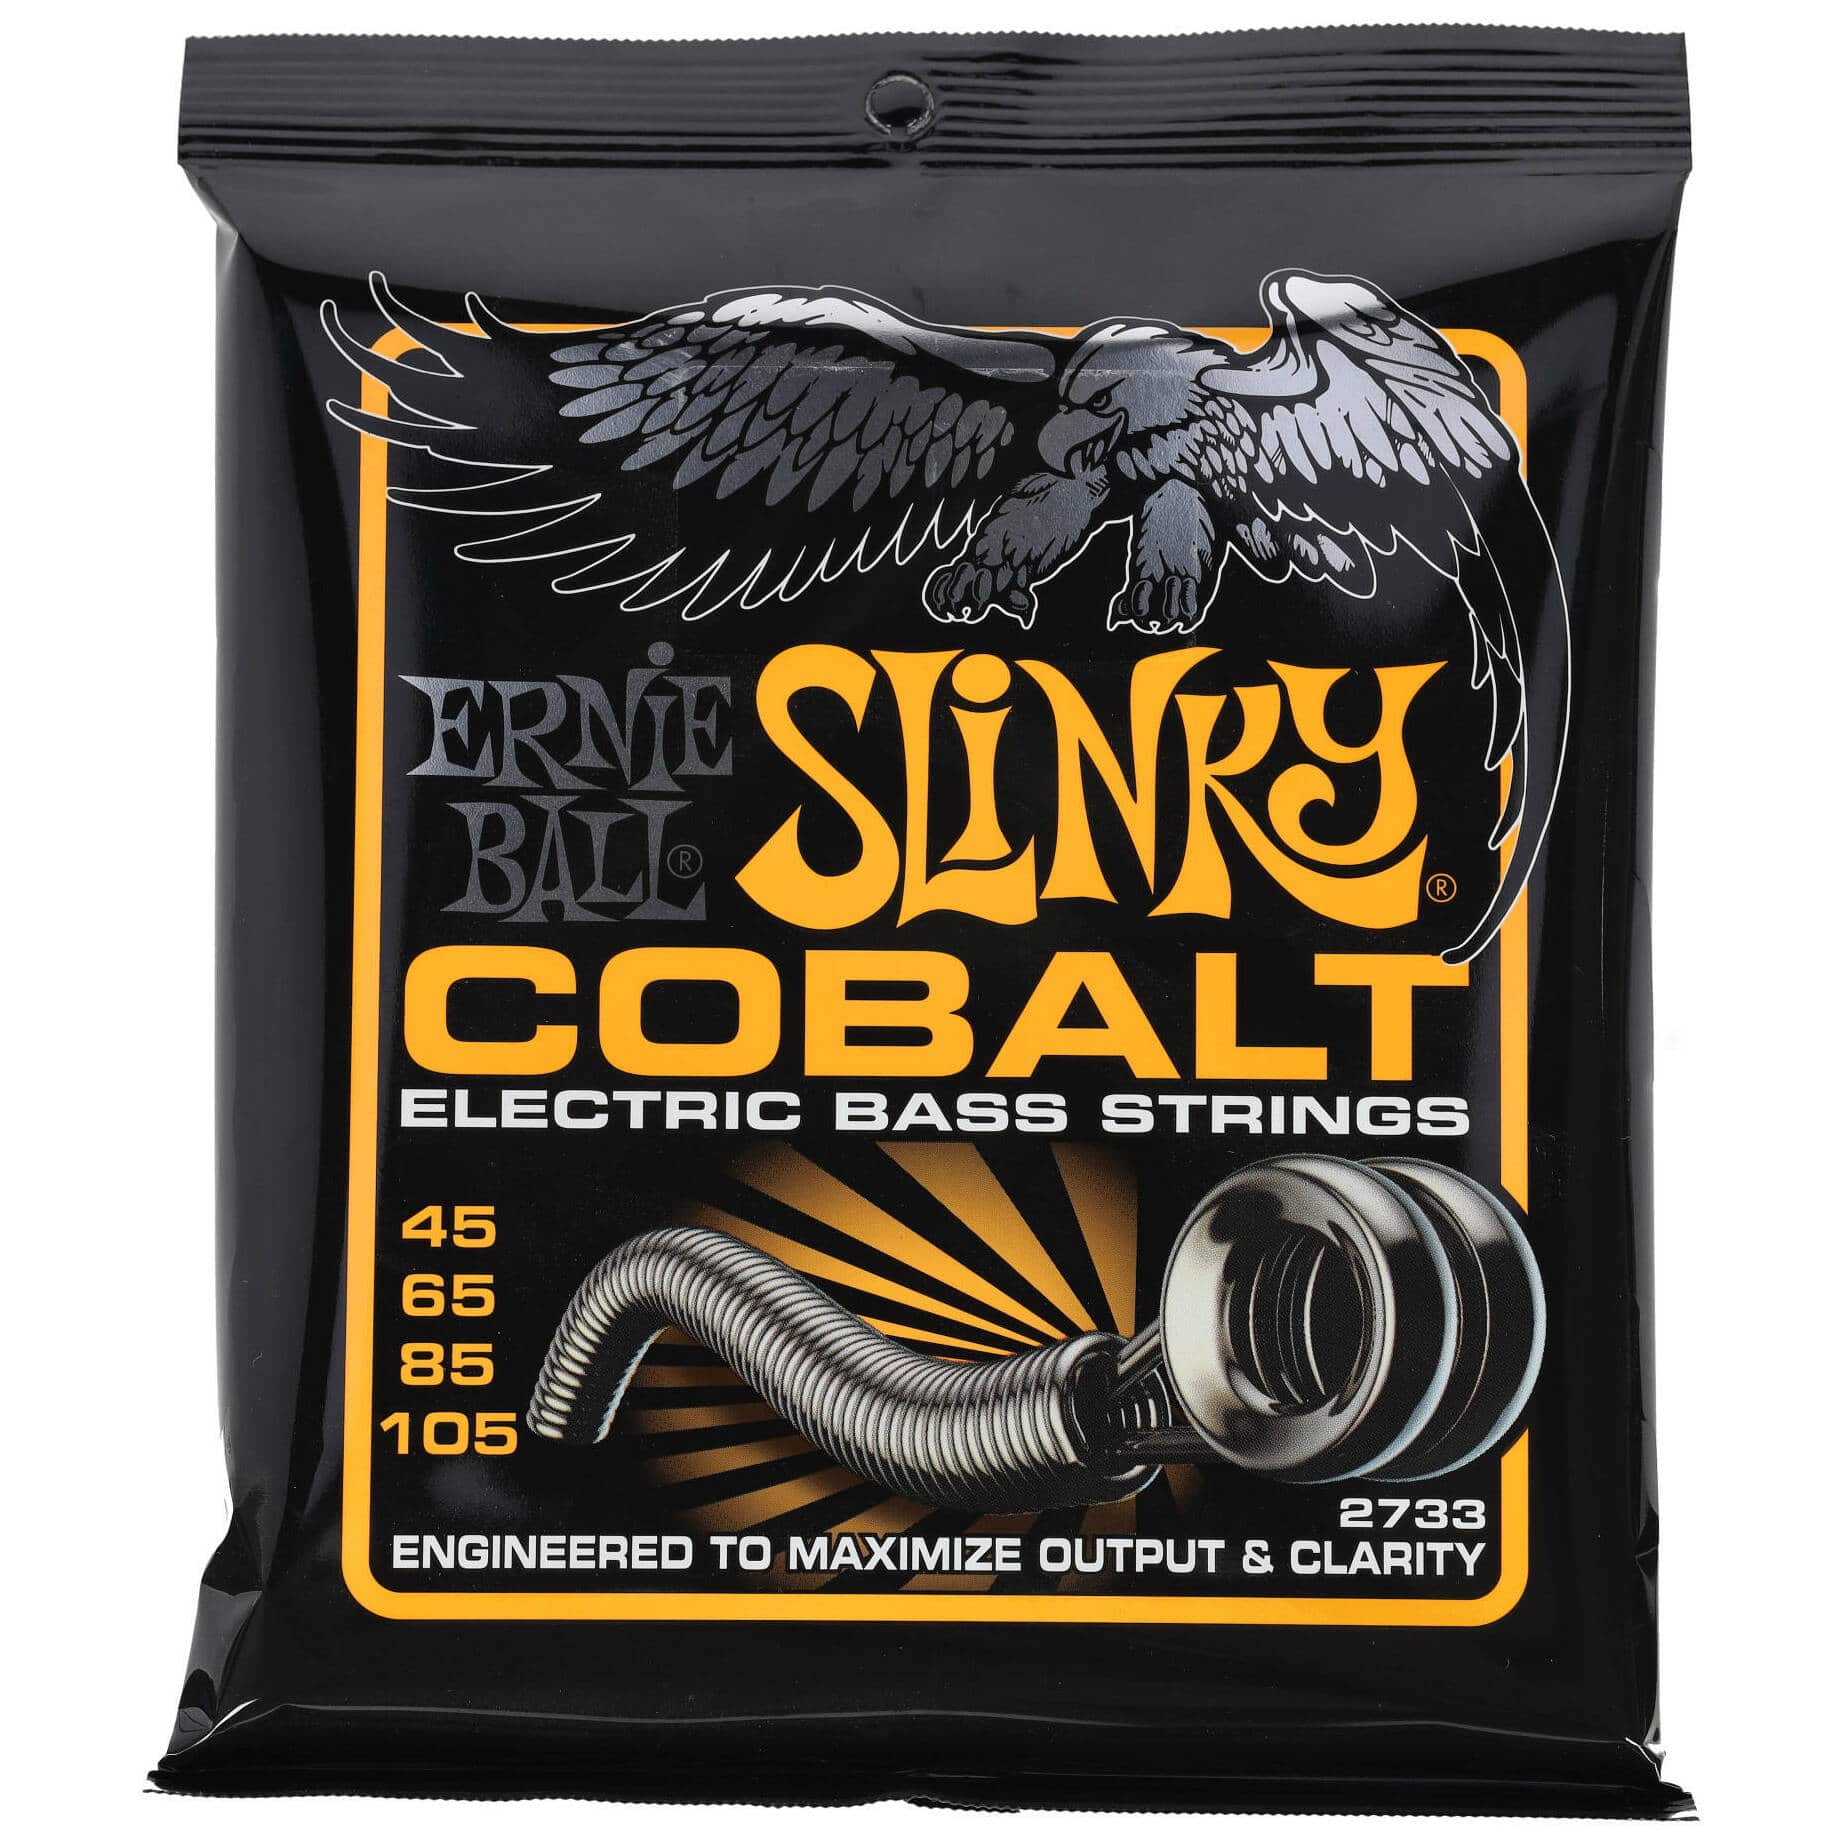 Ernie Ball 2733 Cobalt Bass Hybrid Slinky